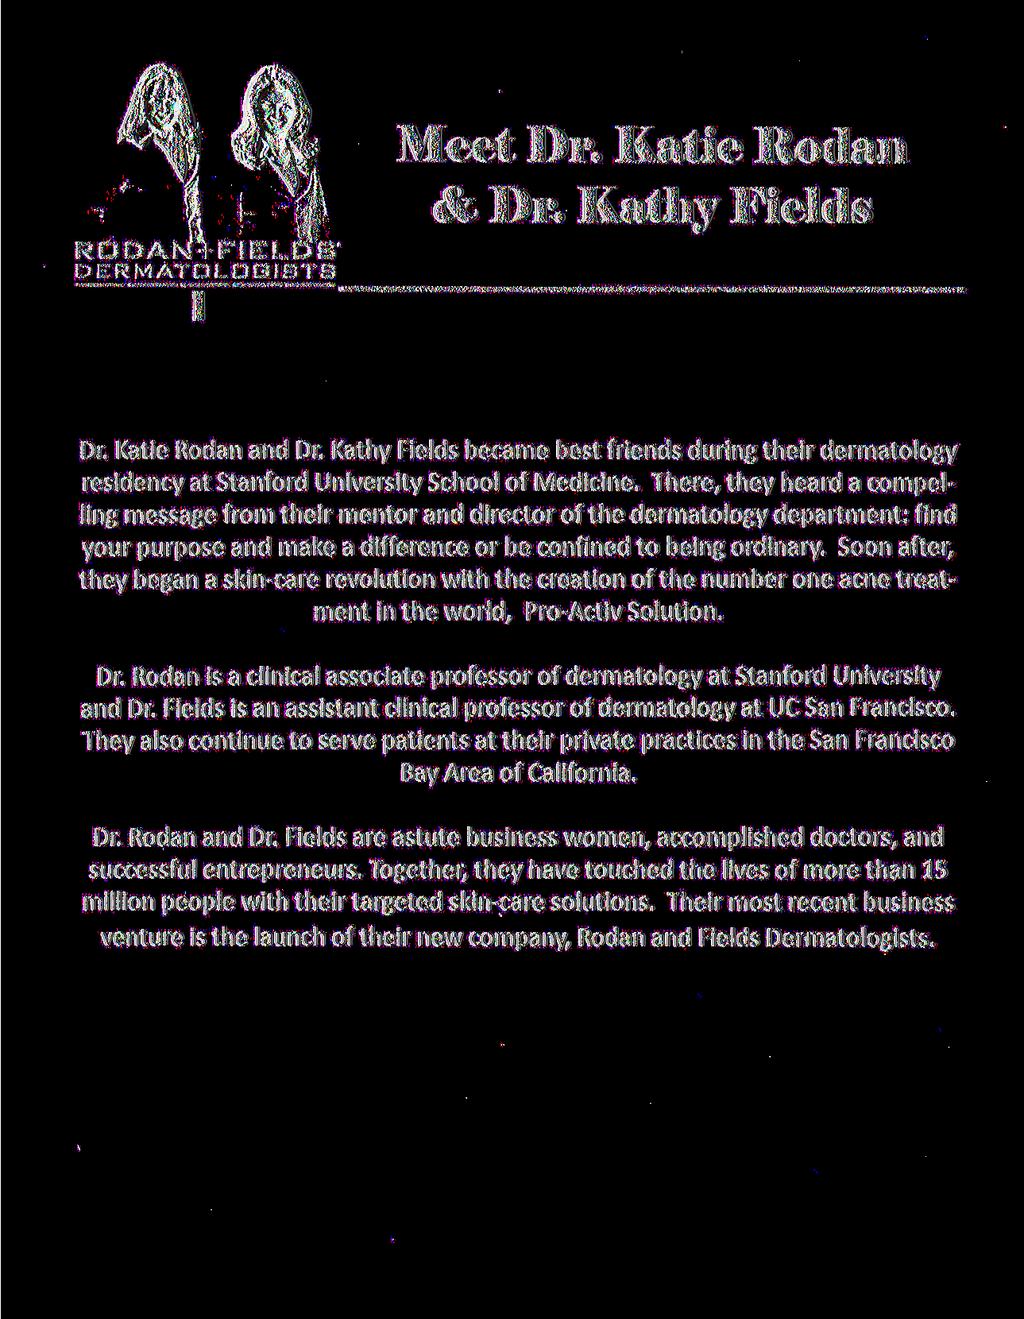 RDDAN + FIELDS DERMATOLOGISTS I Meet Dr. Katie Kodaii & Dr. Kat h v Fields Dr. Katie Rodan and Dr.